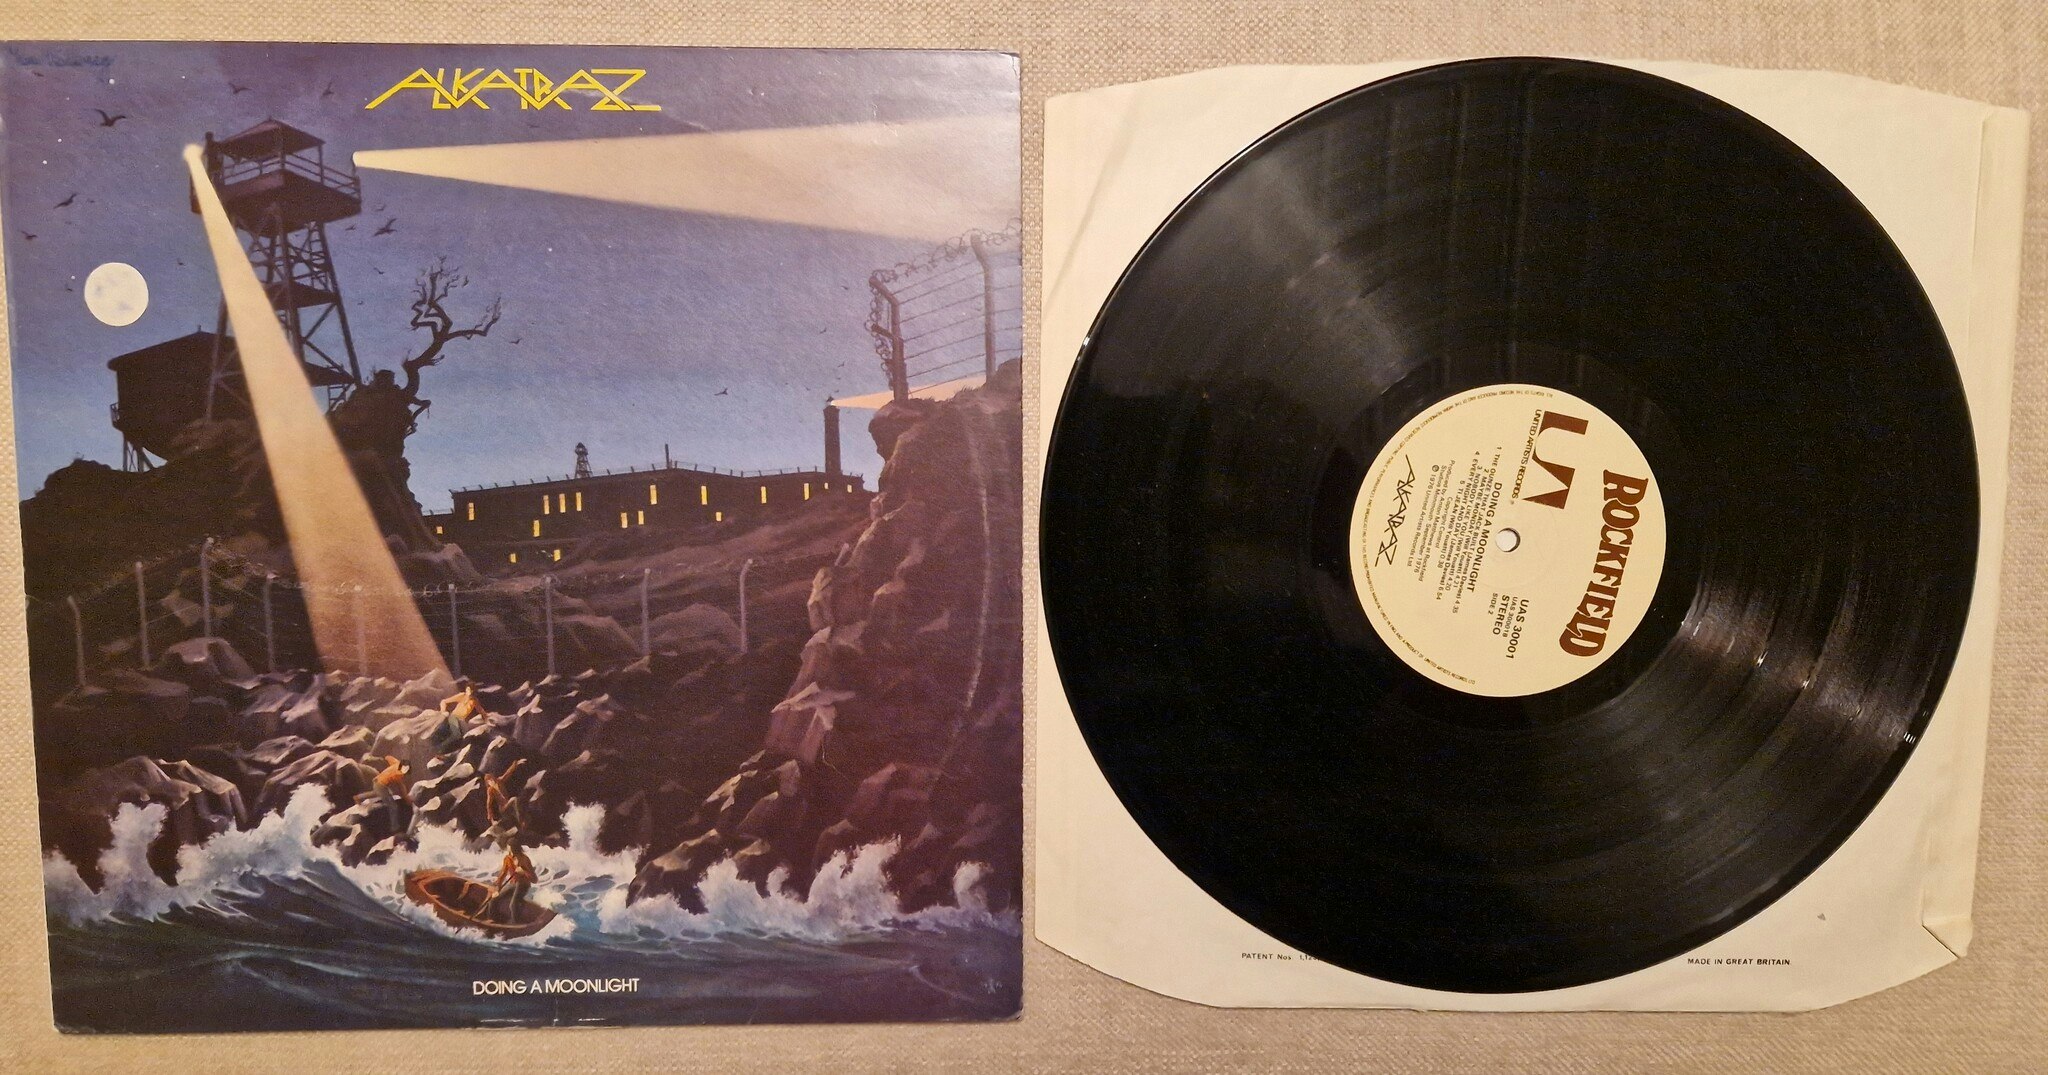 Alkatraz, Doing a moonlight. Vinyl LP